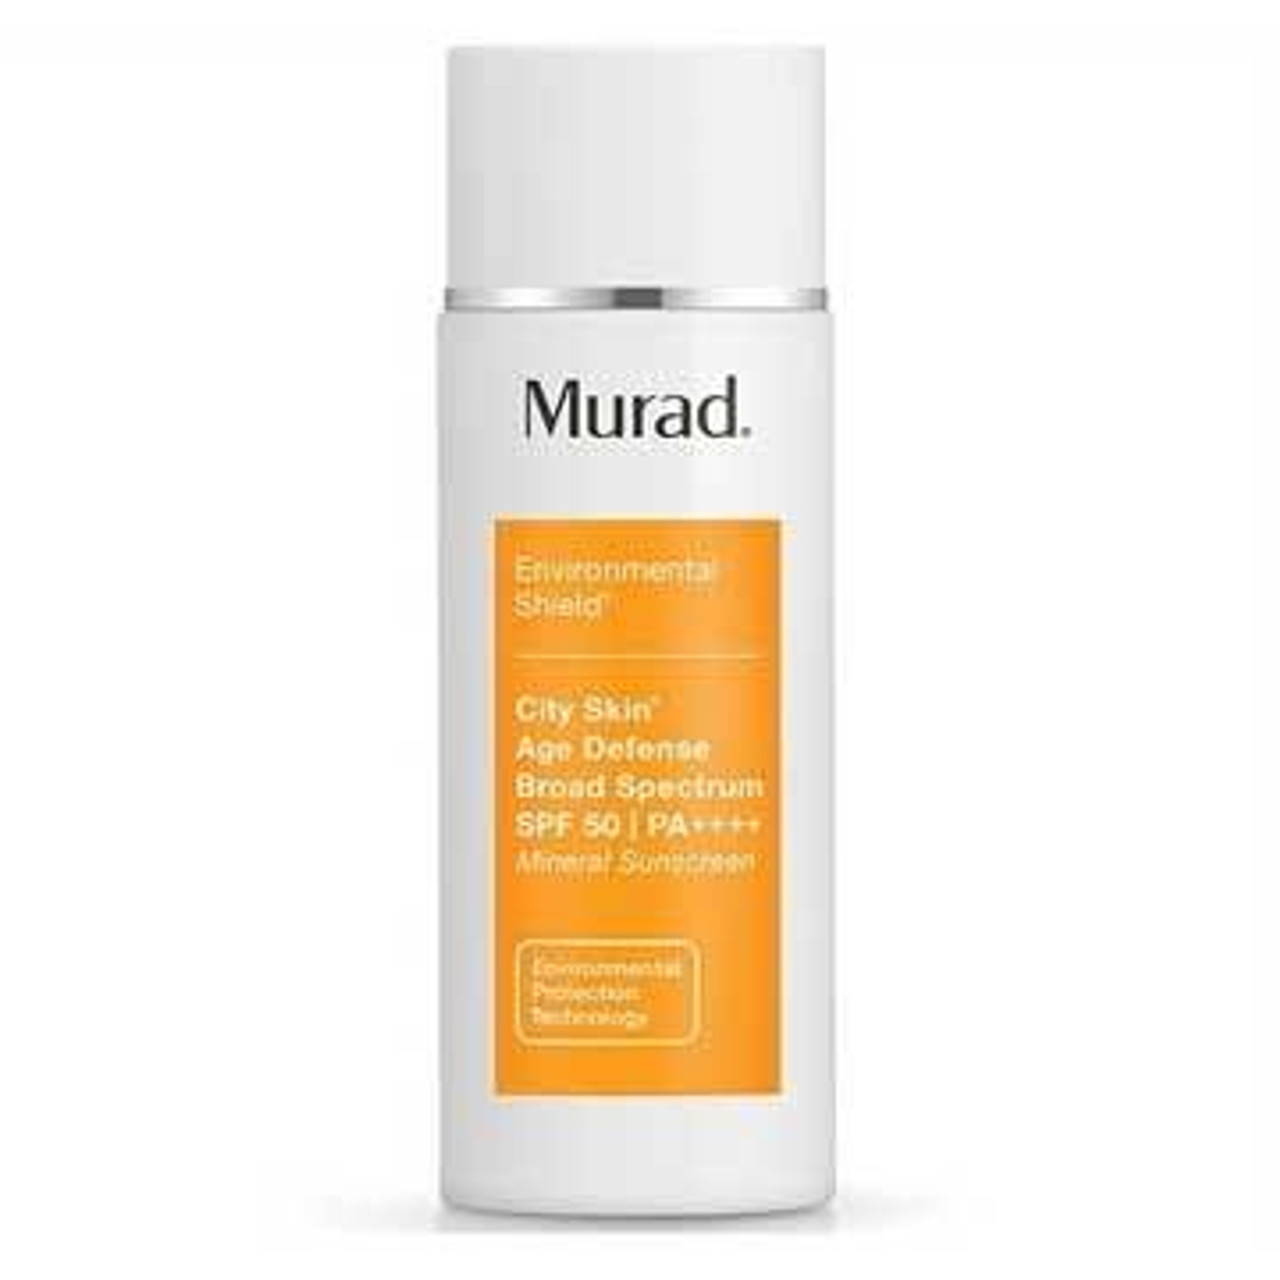 Murad Environmental Shield City Skin Age Defense Broad Spectrum SPF 50 | PA++++ - 1.7 oz